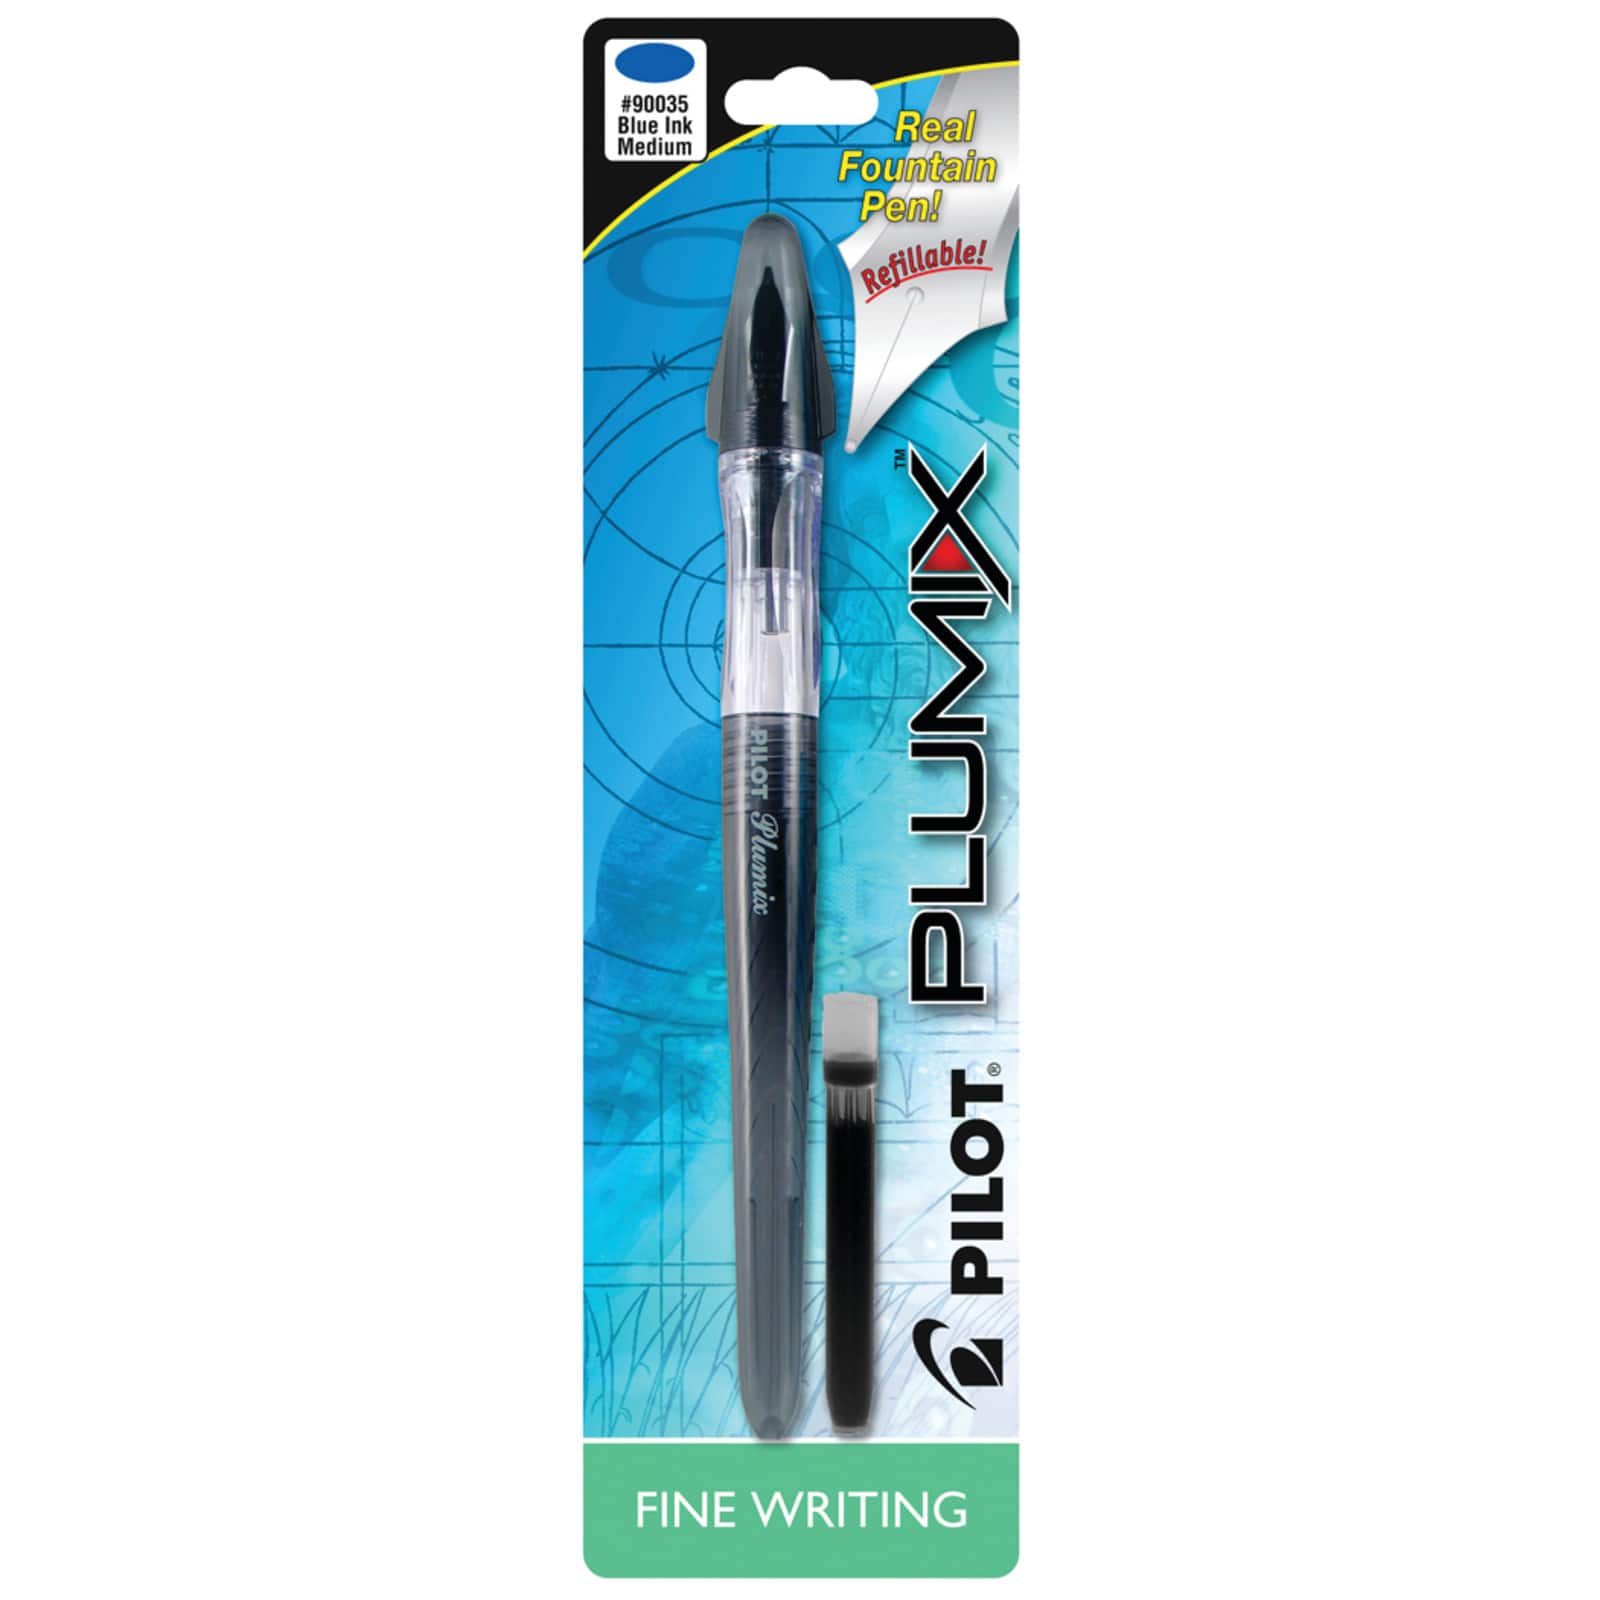 Pilot Plumix Refillable Fountain Pen Medium Nib Includes Single Pen & Cartridge 